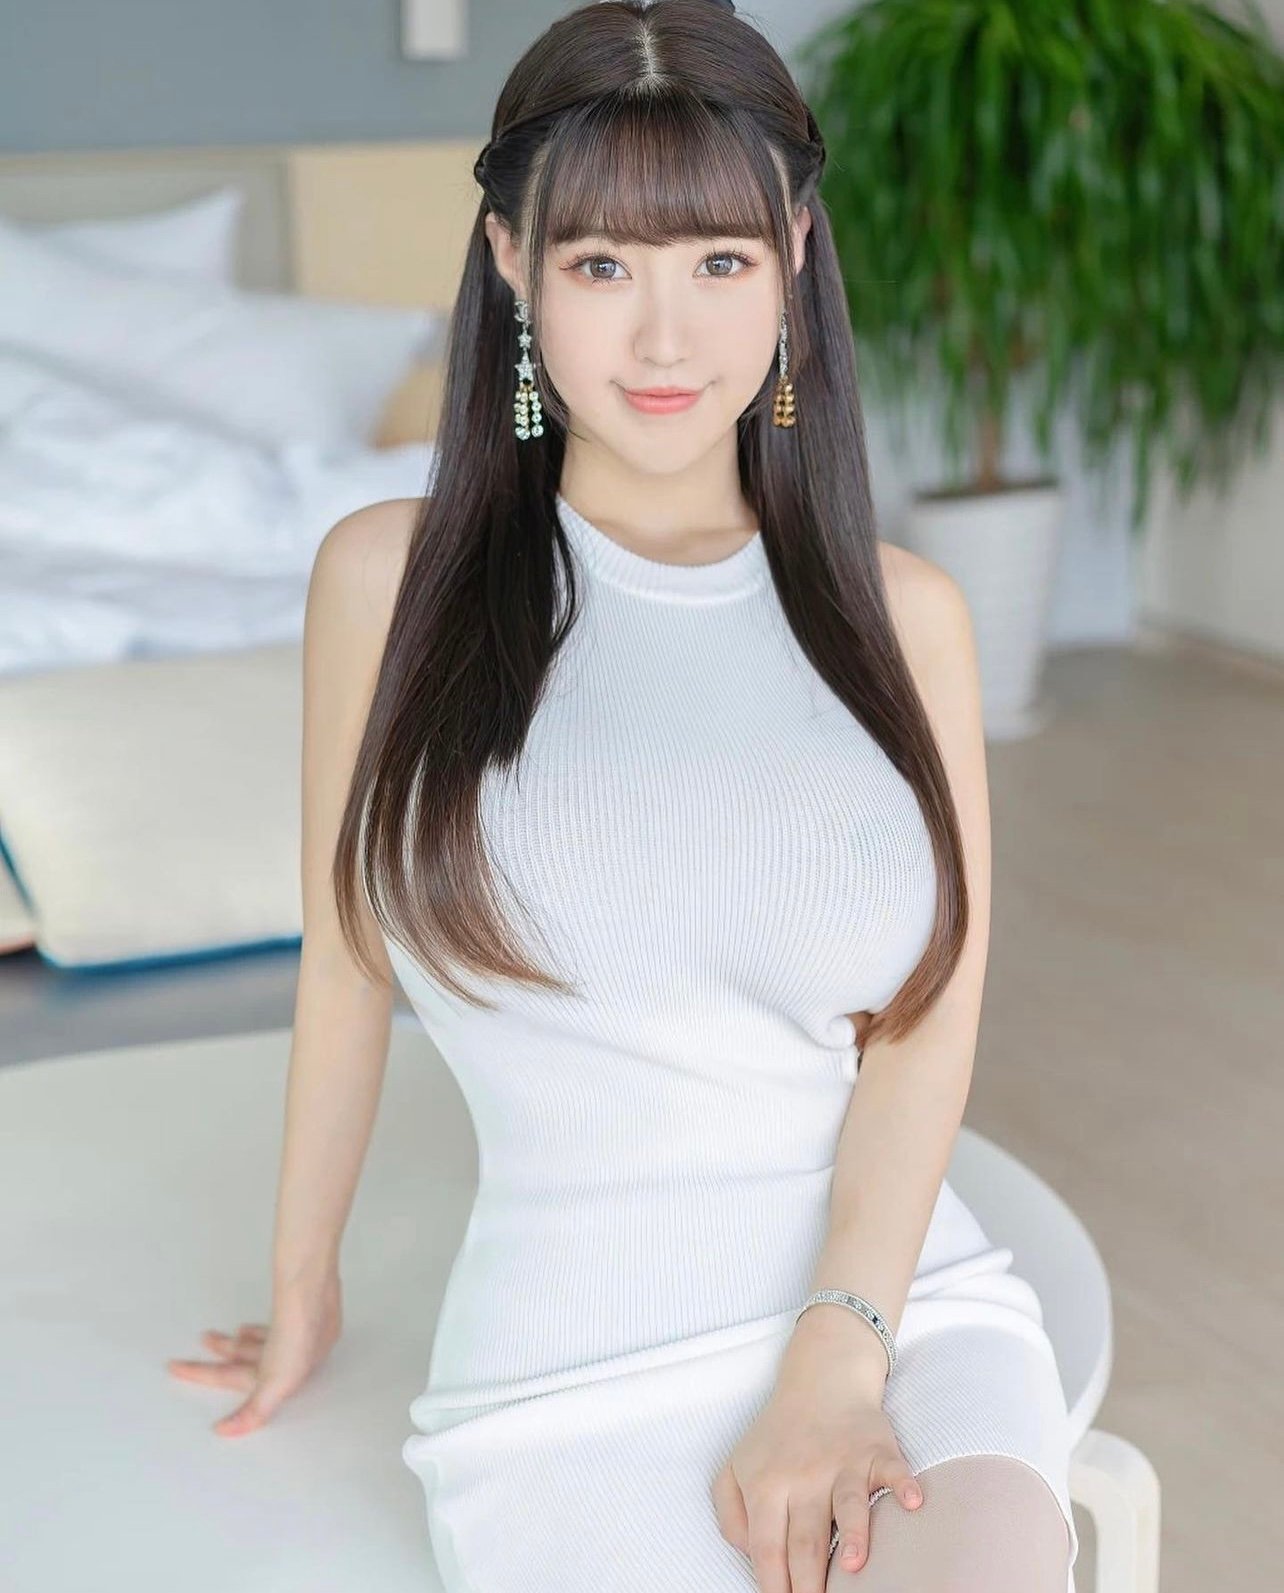 Kim Korean massage girl 7